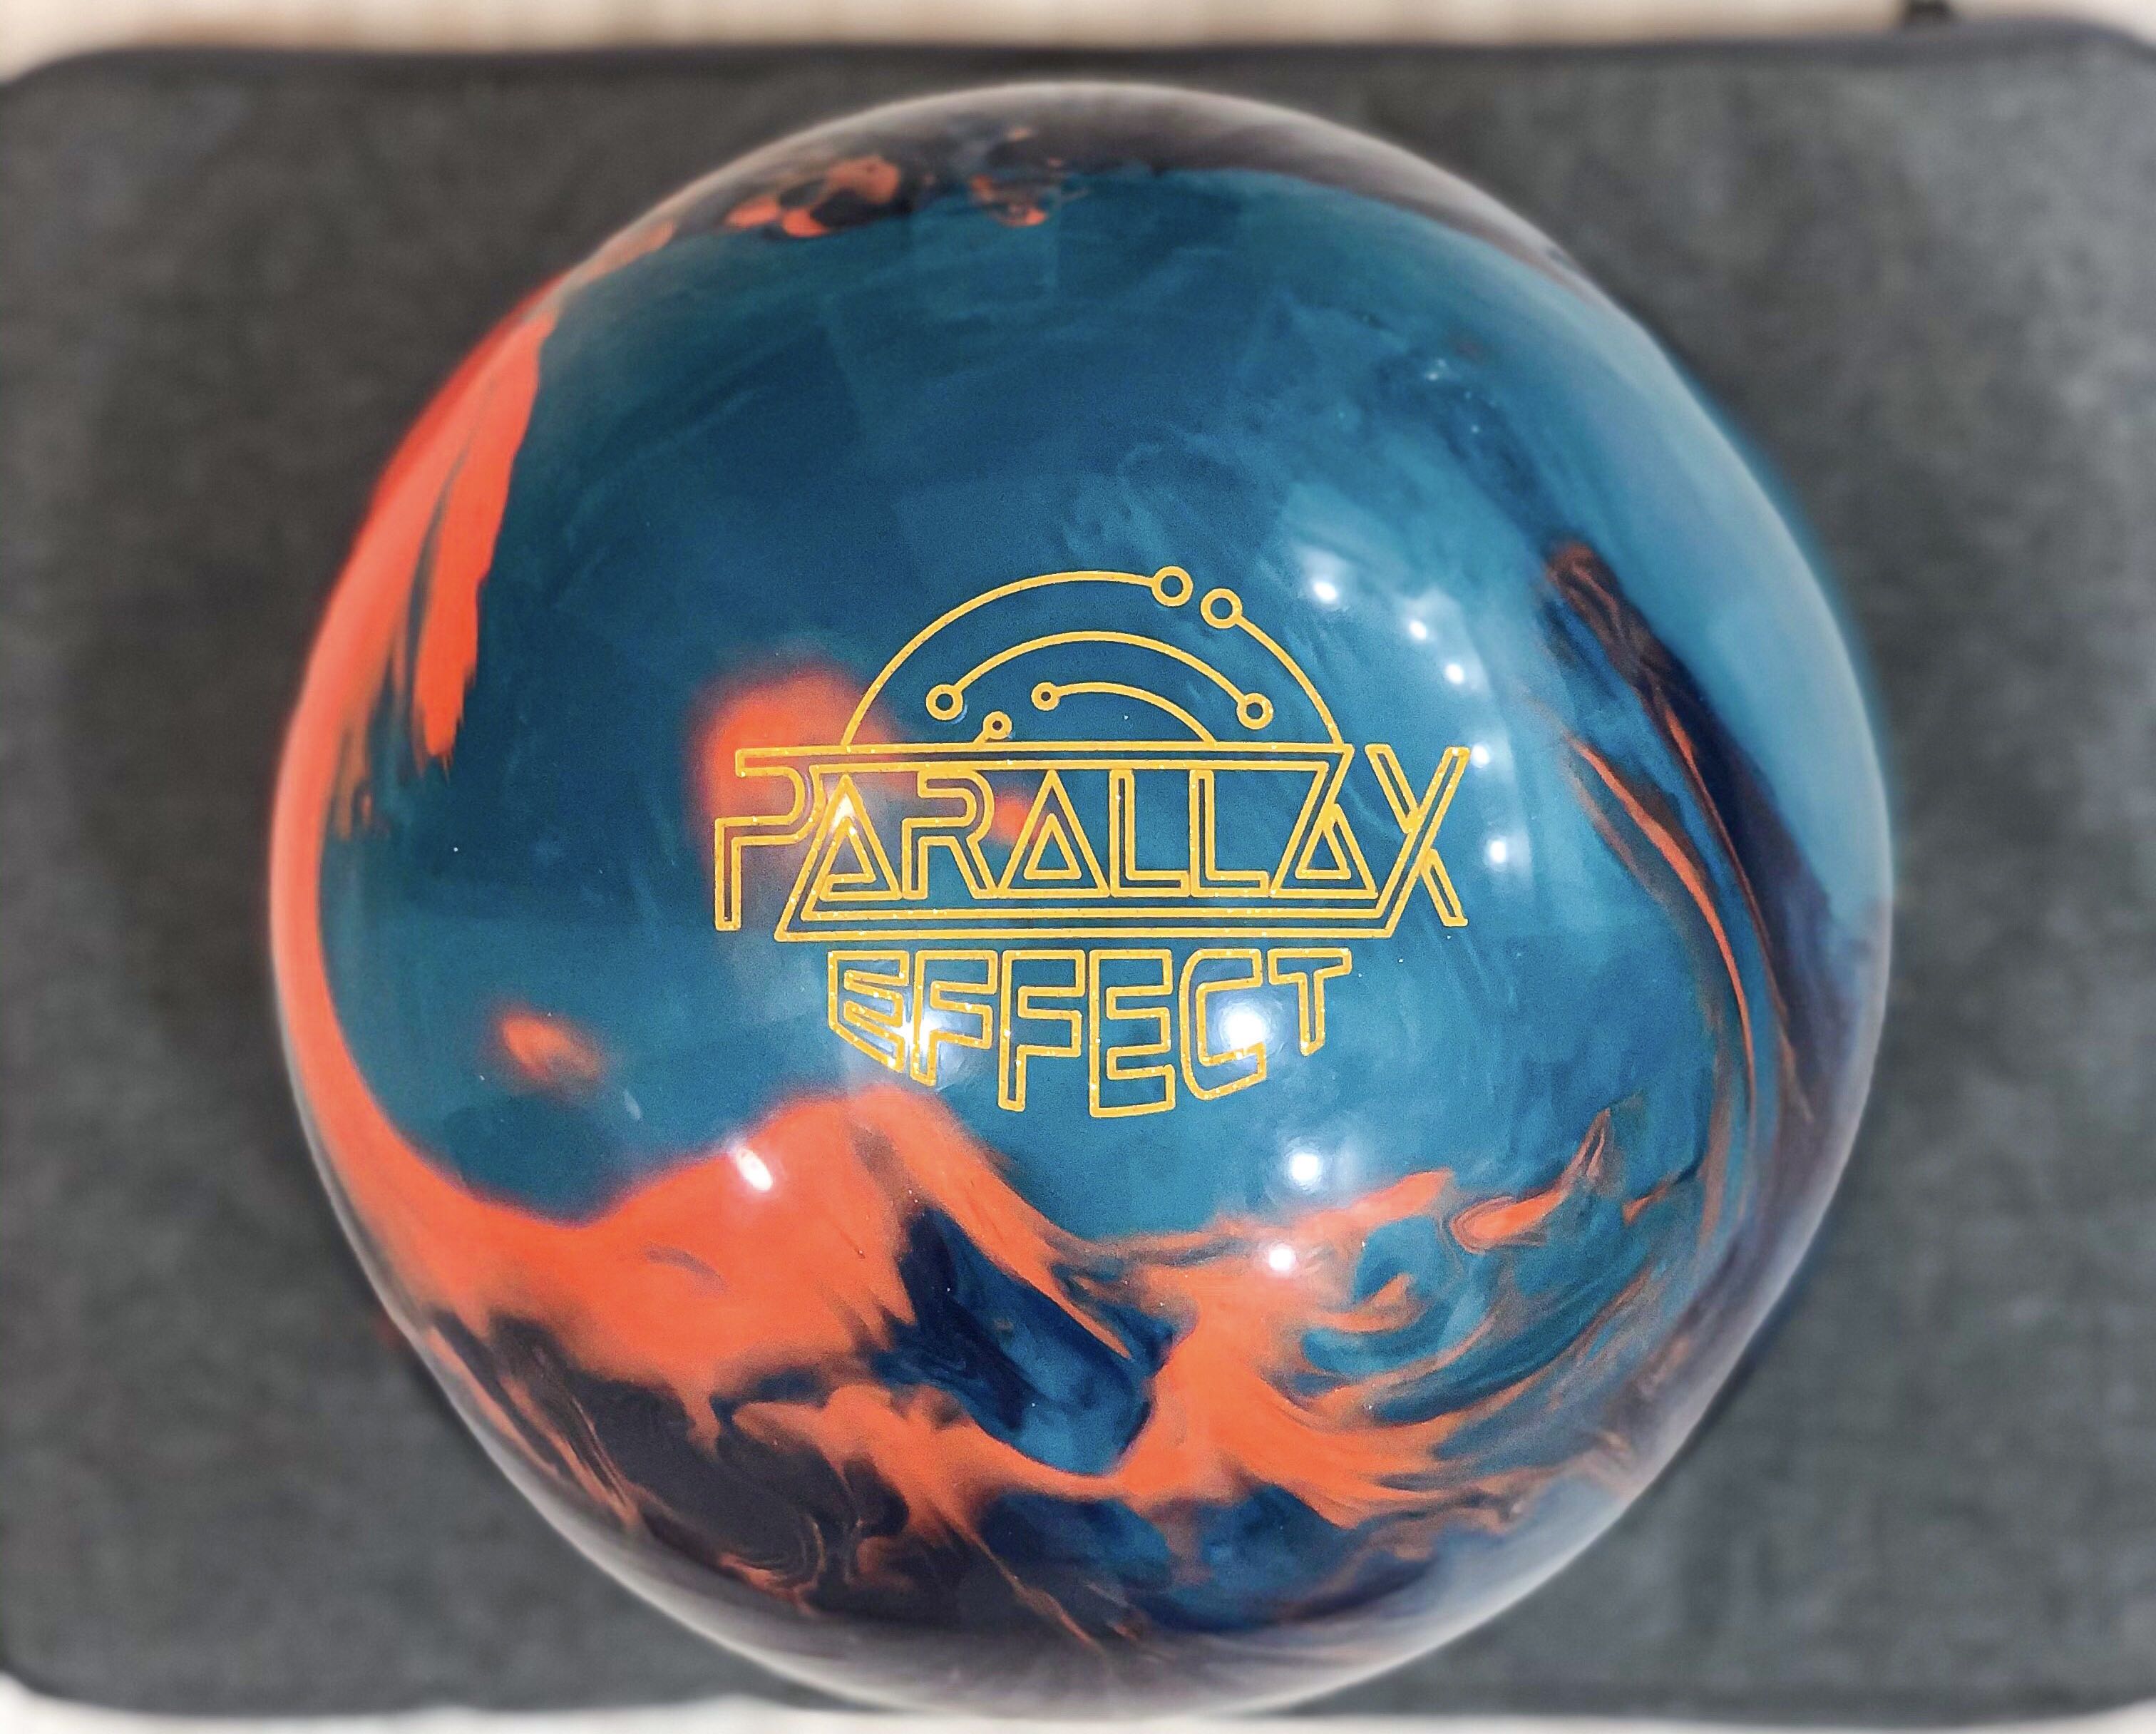 16lb NIB Storm PARALLAX EFFECT New 1st Quality Bowling Ball 